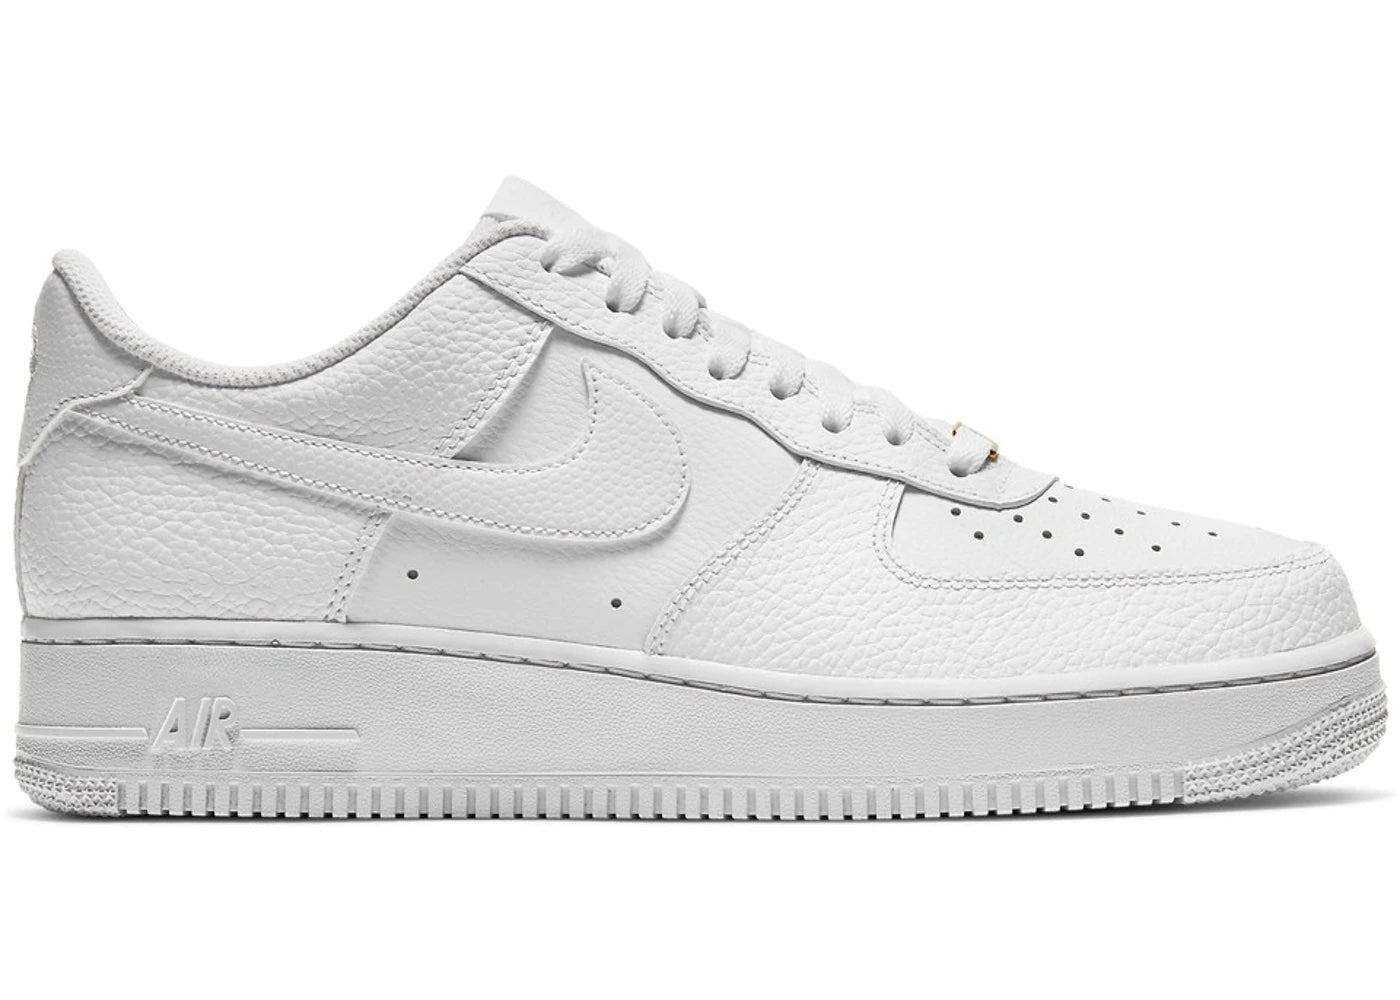 Nike Air Force 1 Low White Tumbled Leather - Paroissesaintefoy Sneakers Sale Online